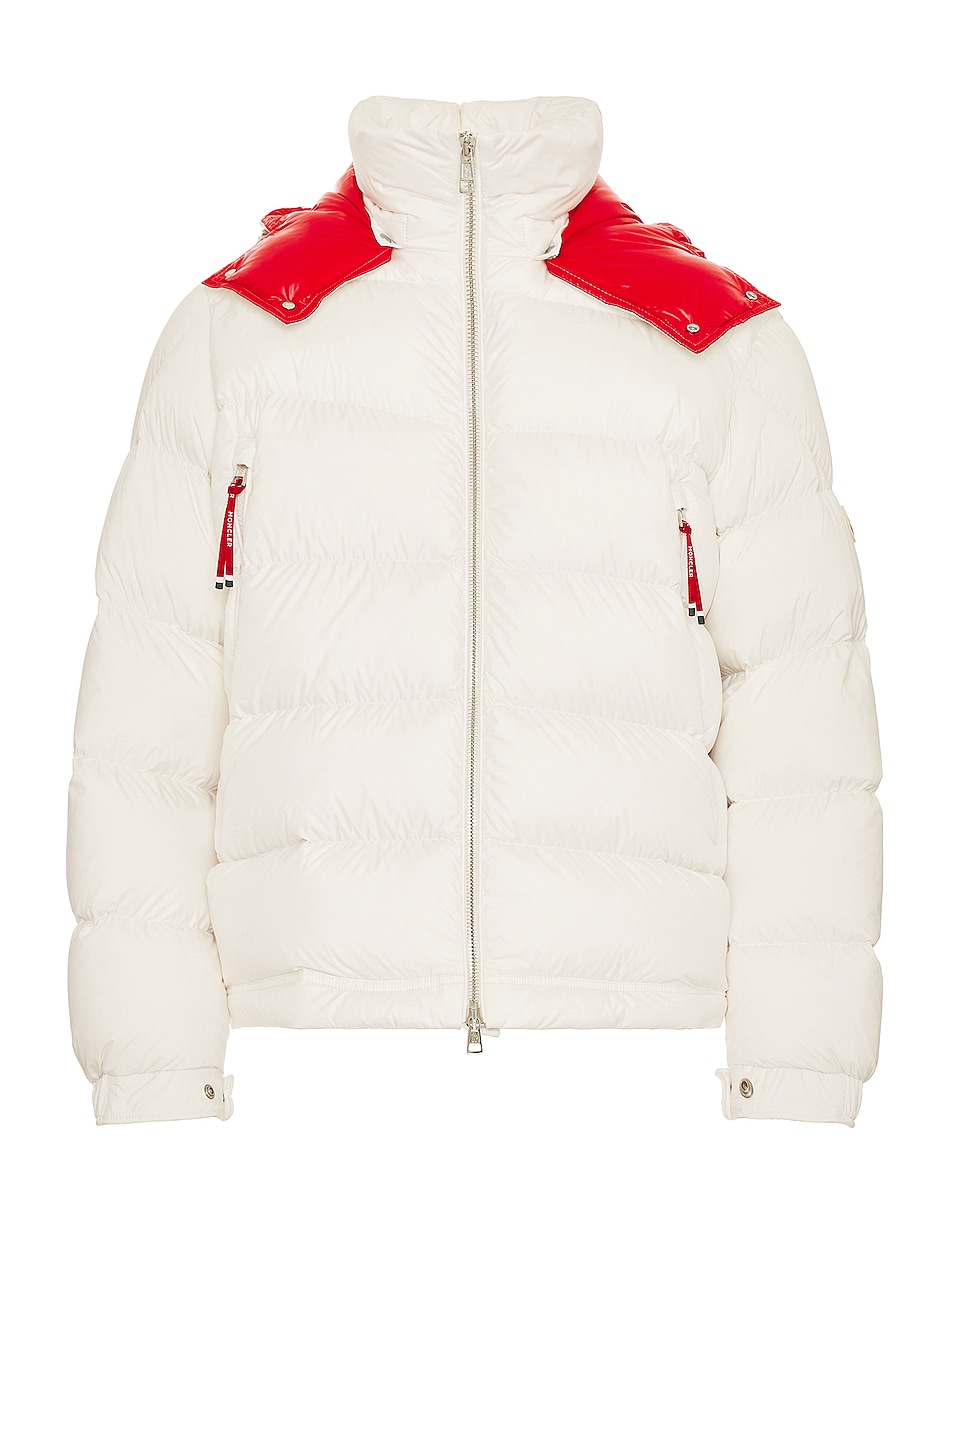 Moncler Poirier Jacket in White | FWRD